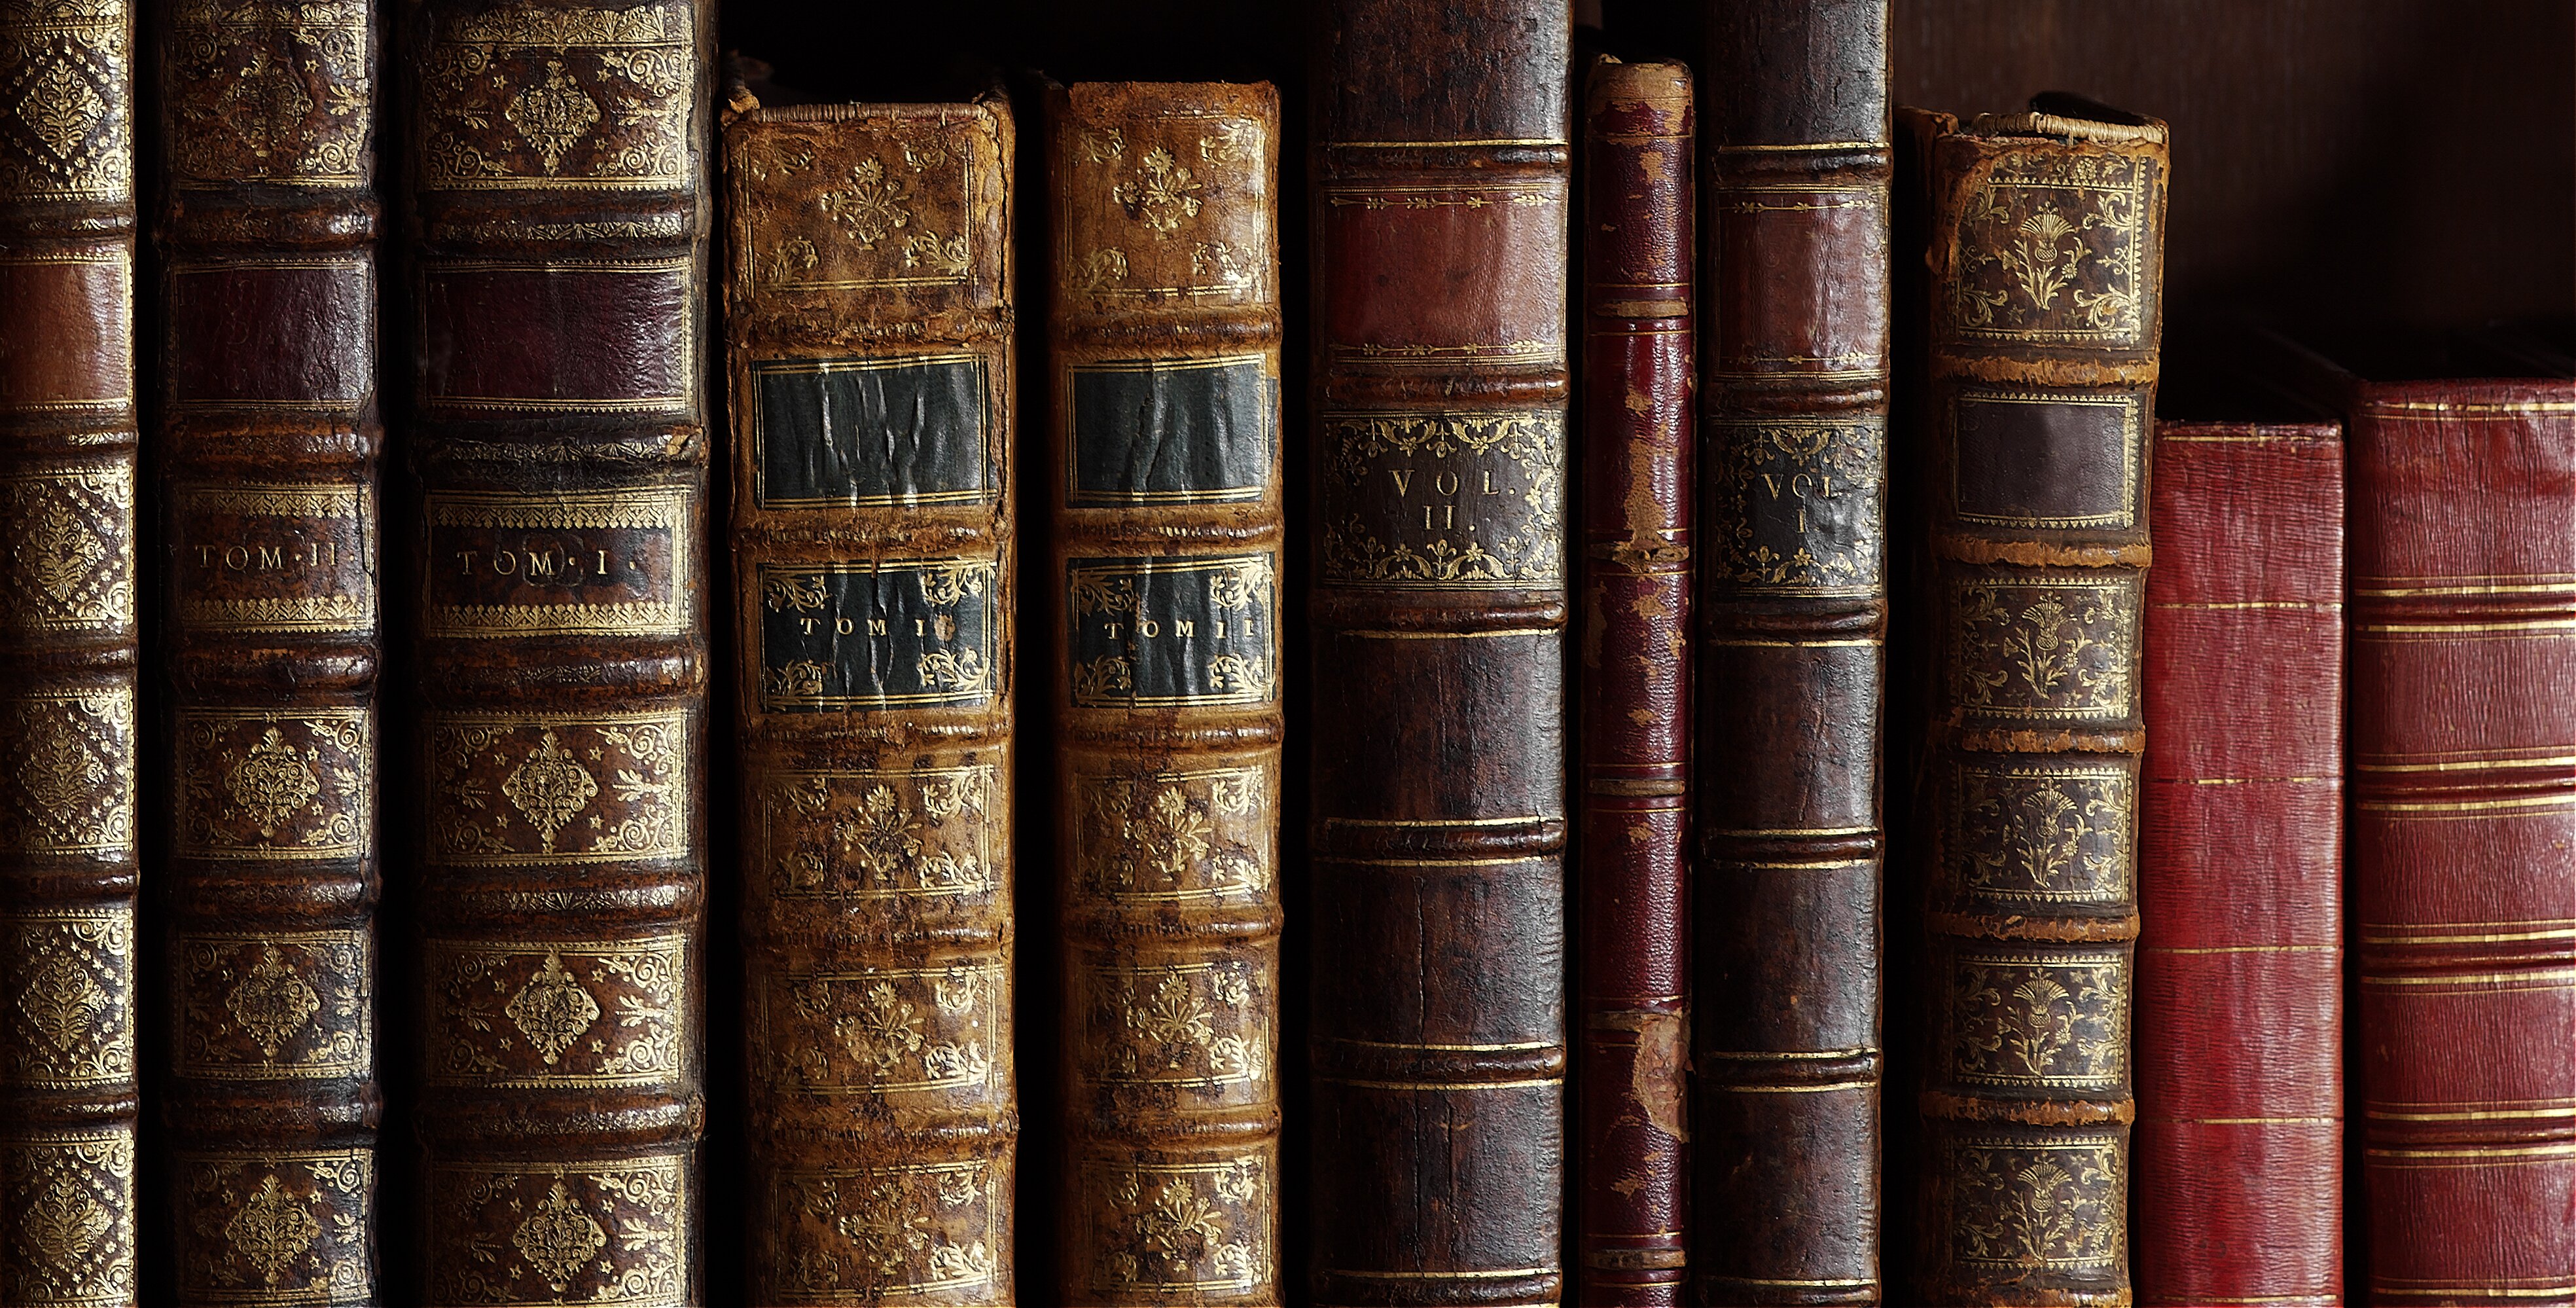 Shelf of old books